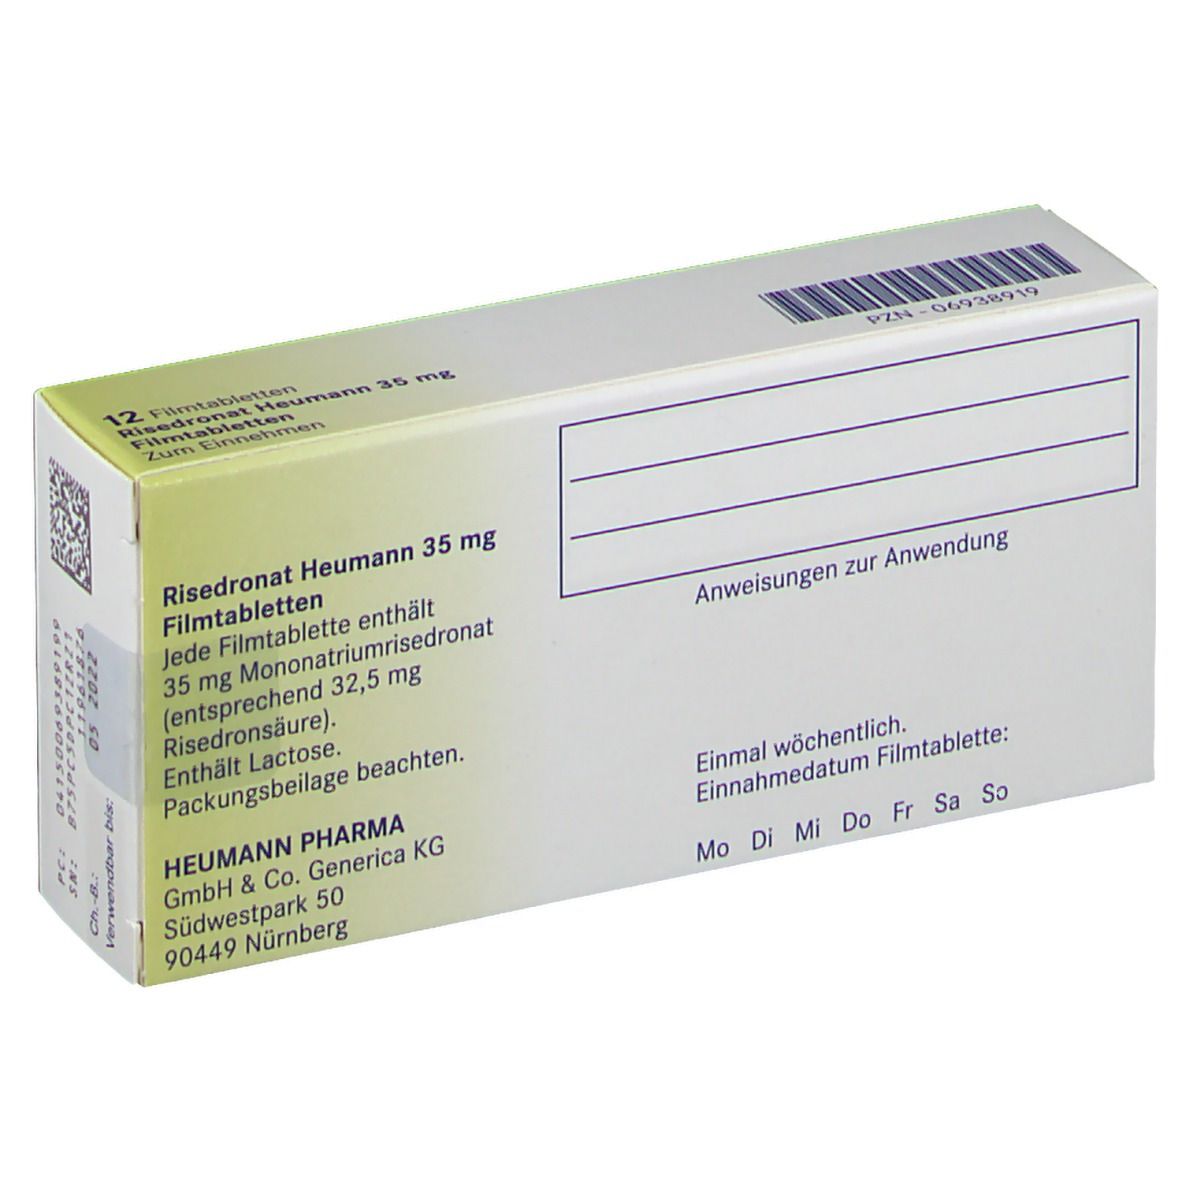 Risedronat Heumann 35 mg